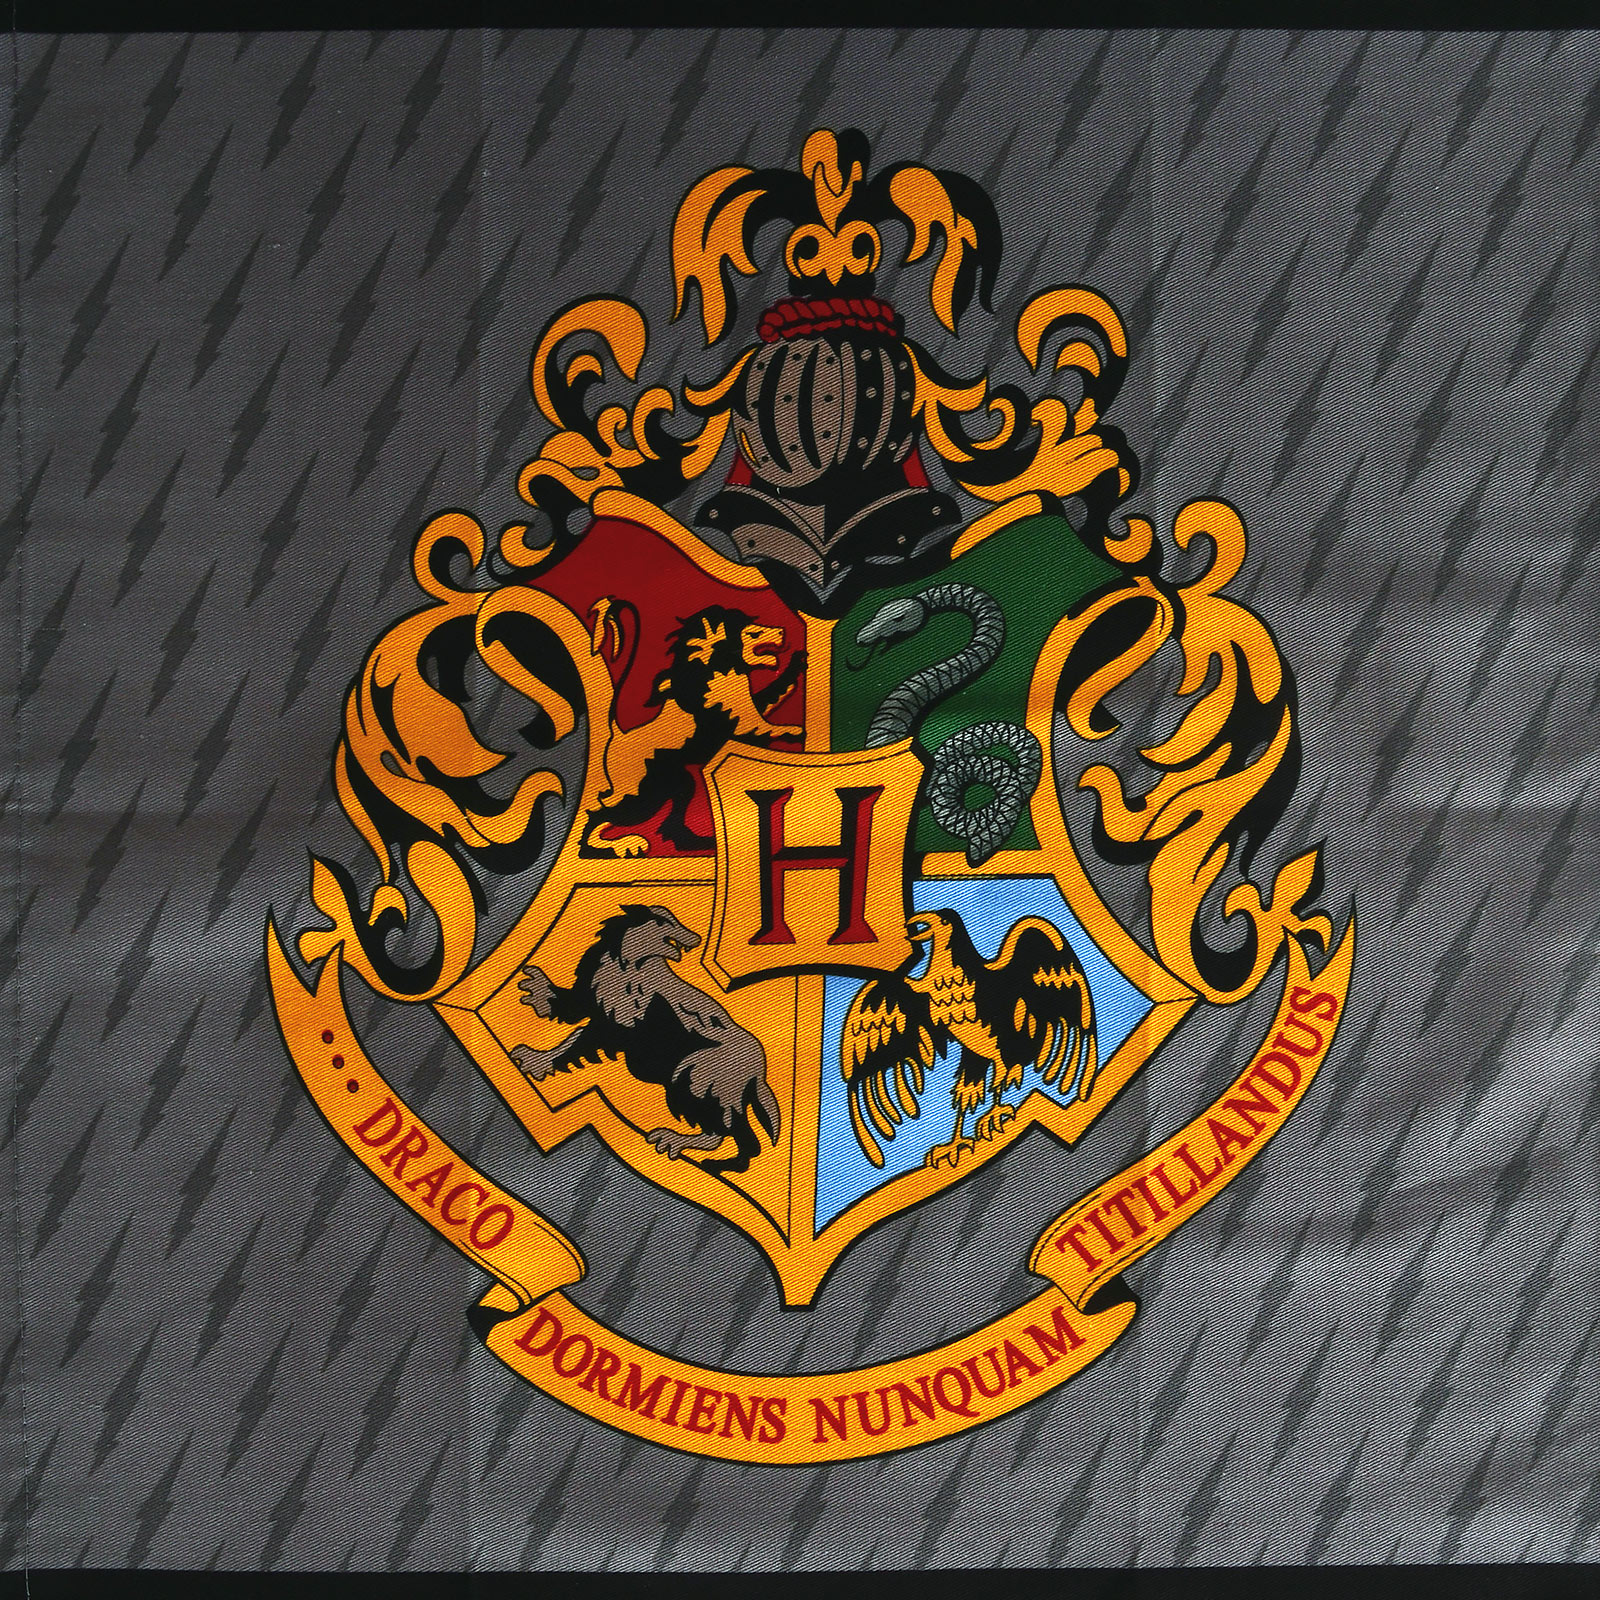 Harry Potter - Gryffondor & Hogwarts Set de torchons